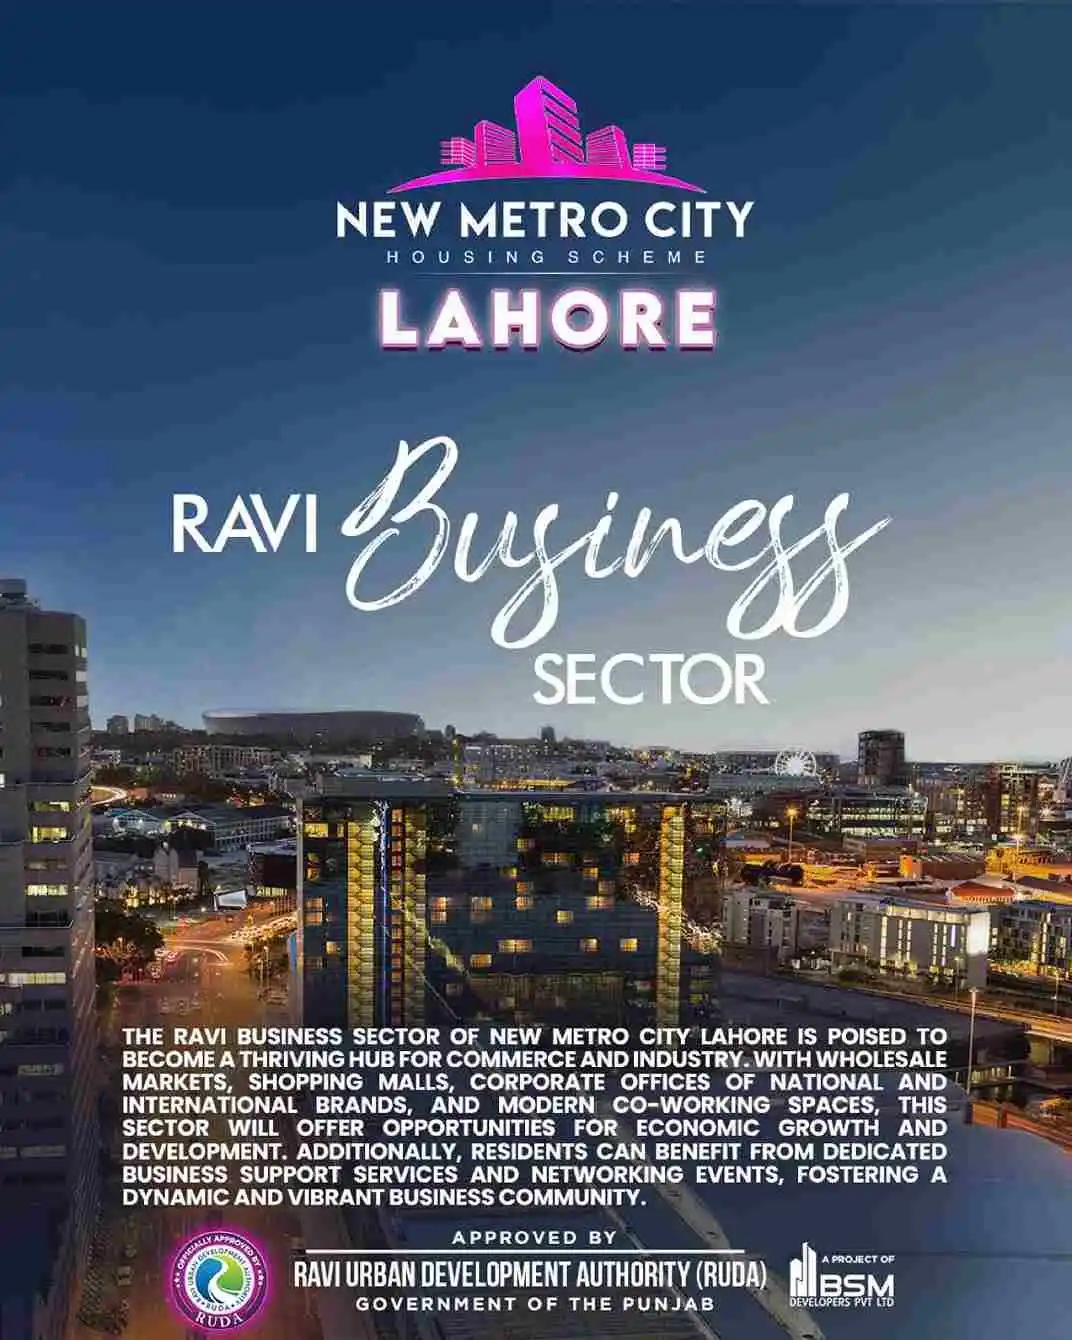 New Metro City Lahore Ravi Business Sector